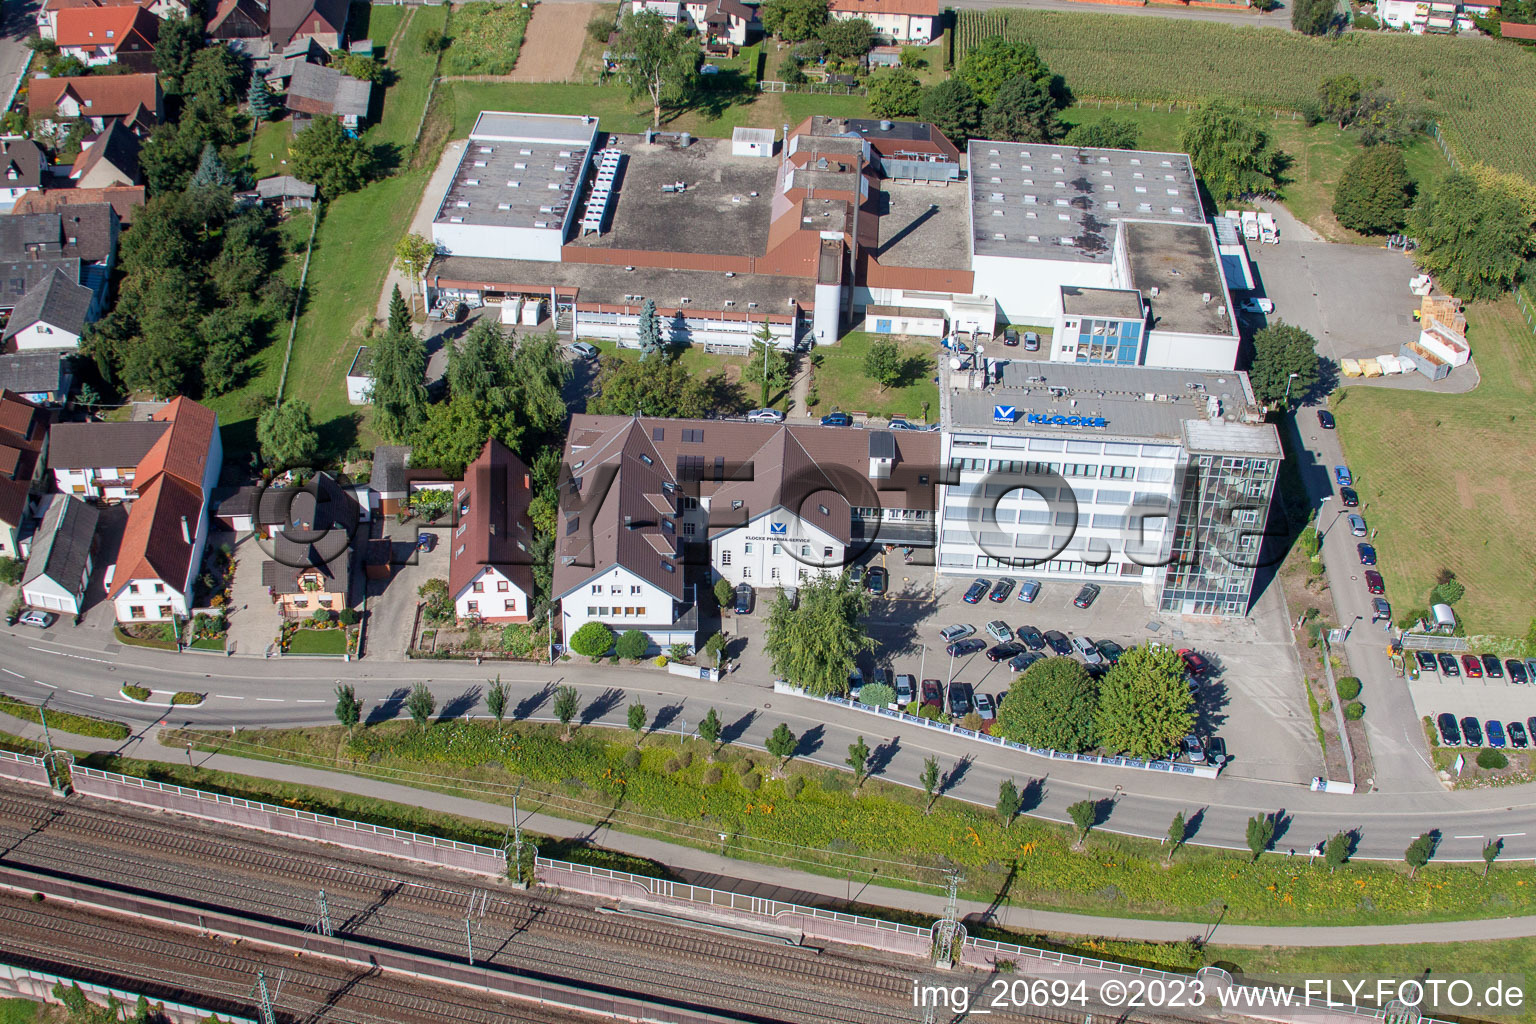 Klocke Pharma GmbH in the district Urloffen in Appenweier in the state Baden-Wuerttemberg, Germany seen from above